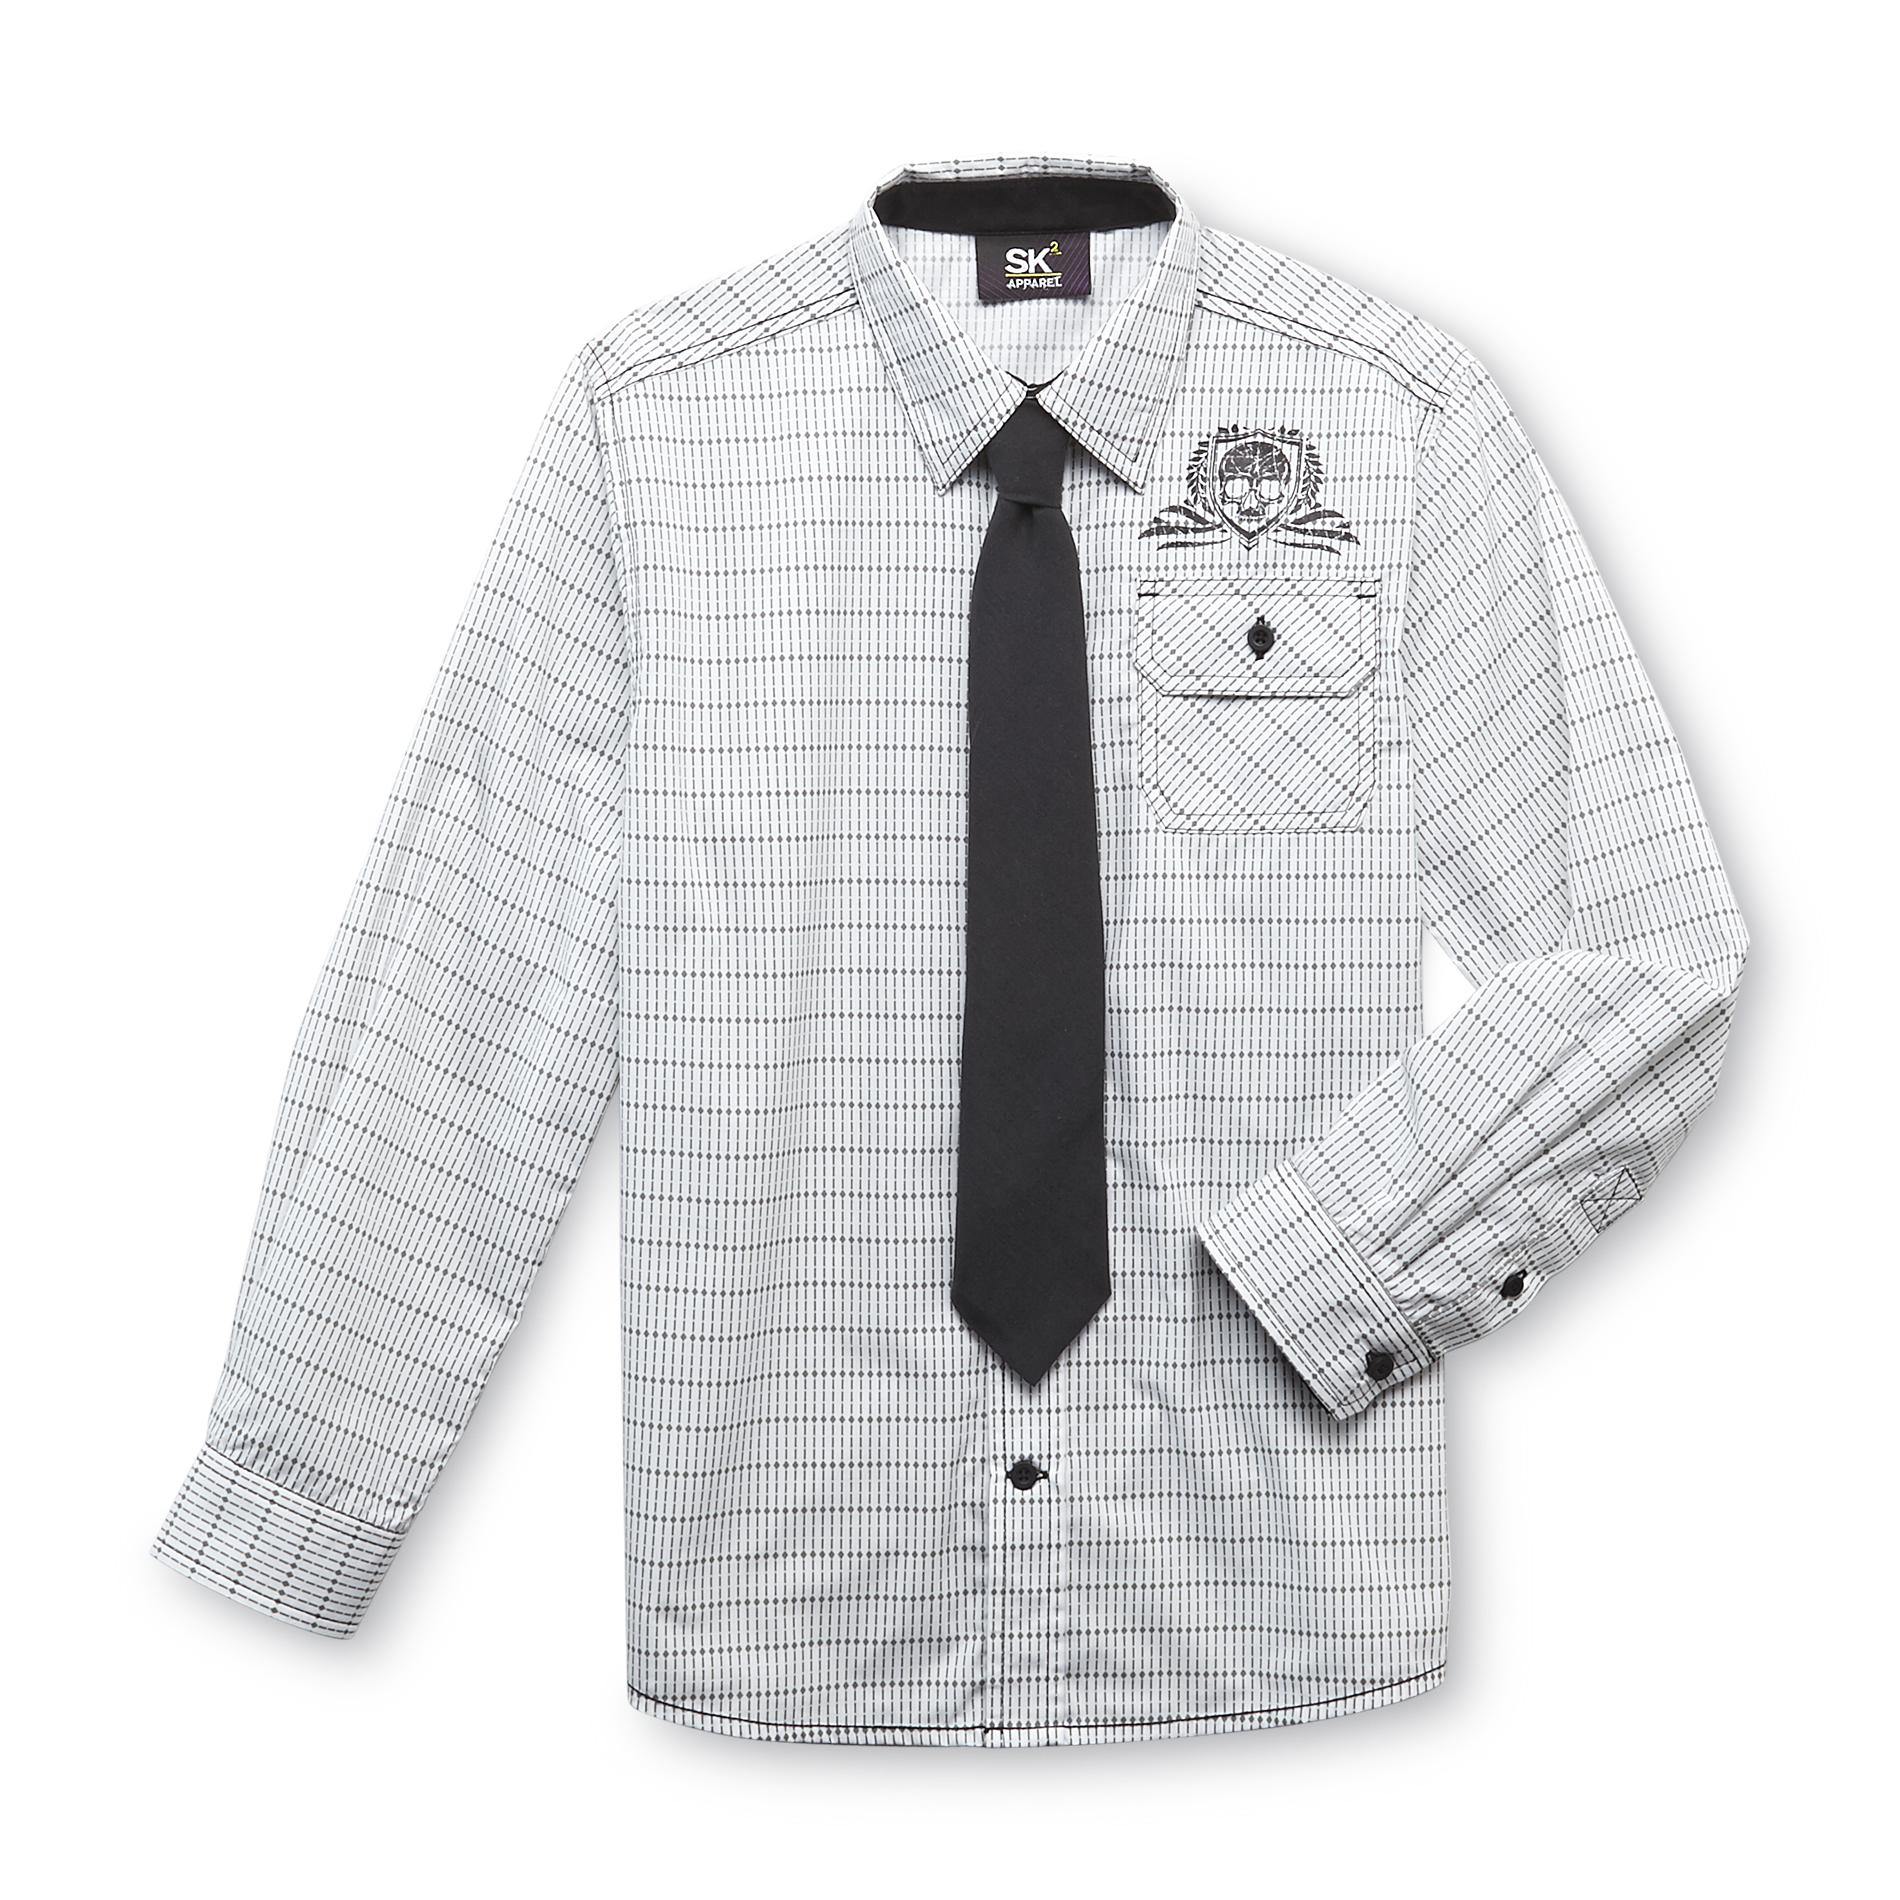 SK2 Boy's Dress Shirt & Necktie - Skull